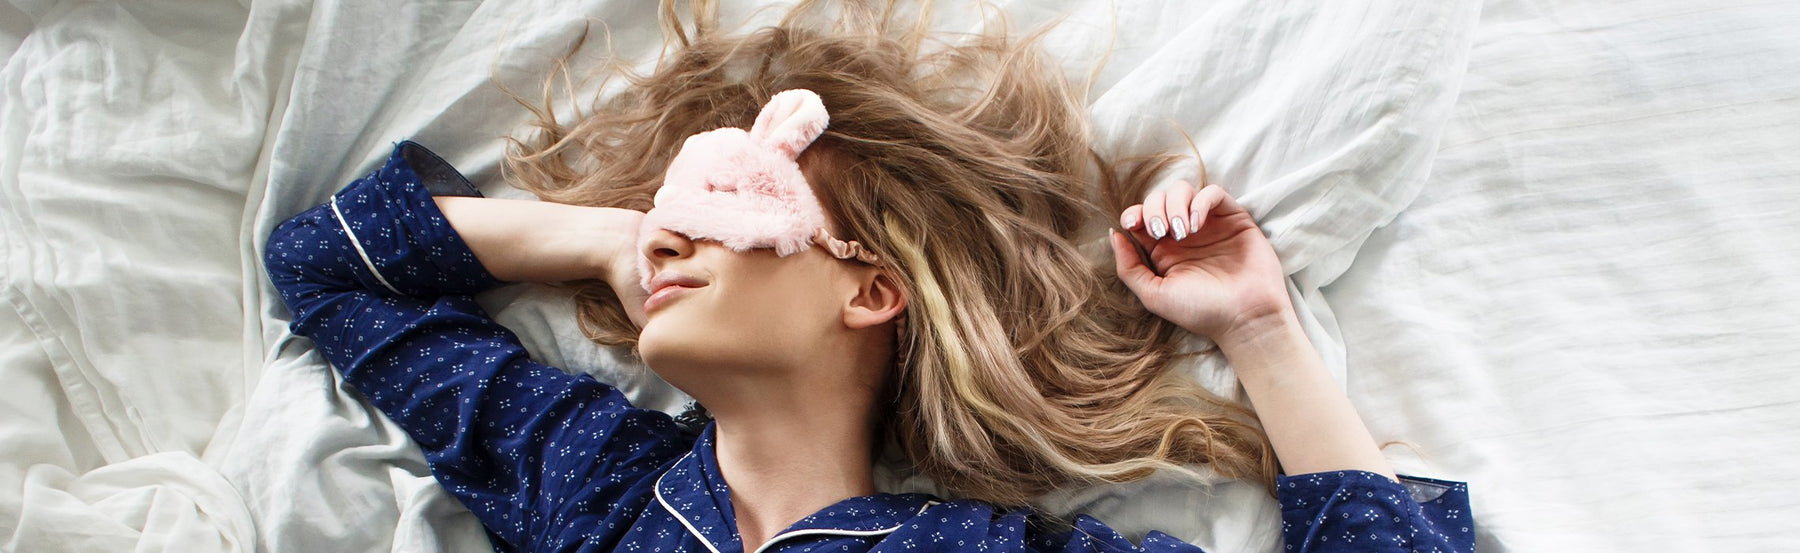 7 Ways to Improve Your Sleep for Sleep Awareness Week